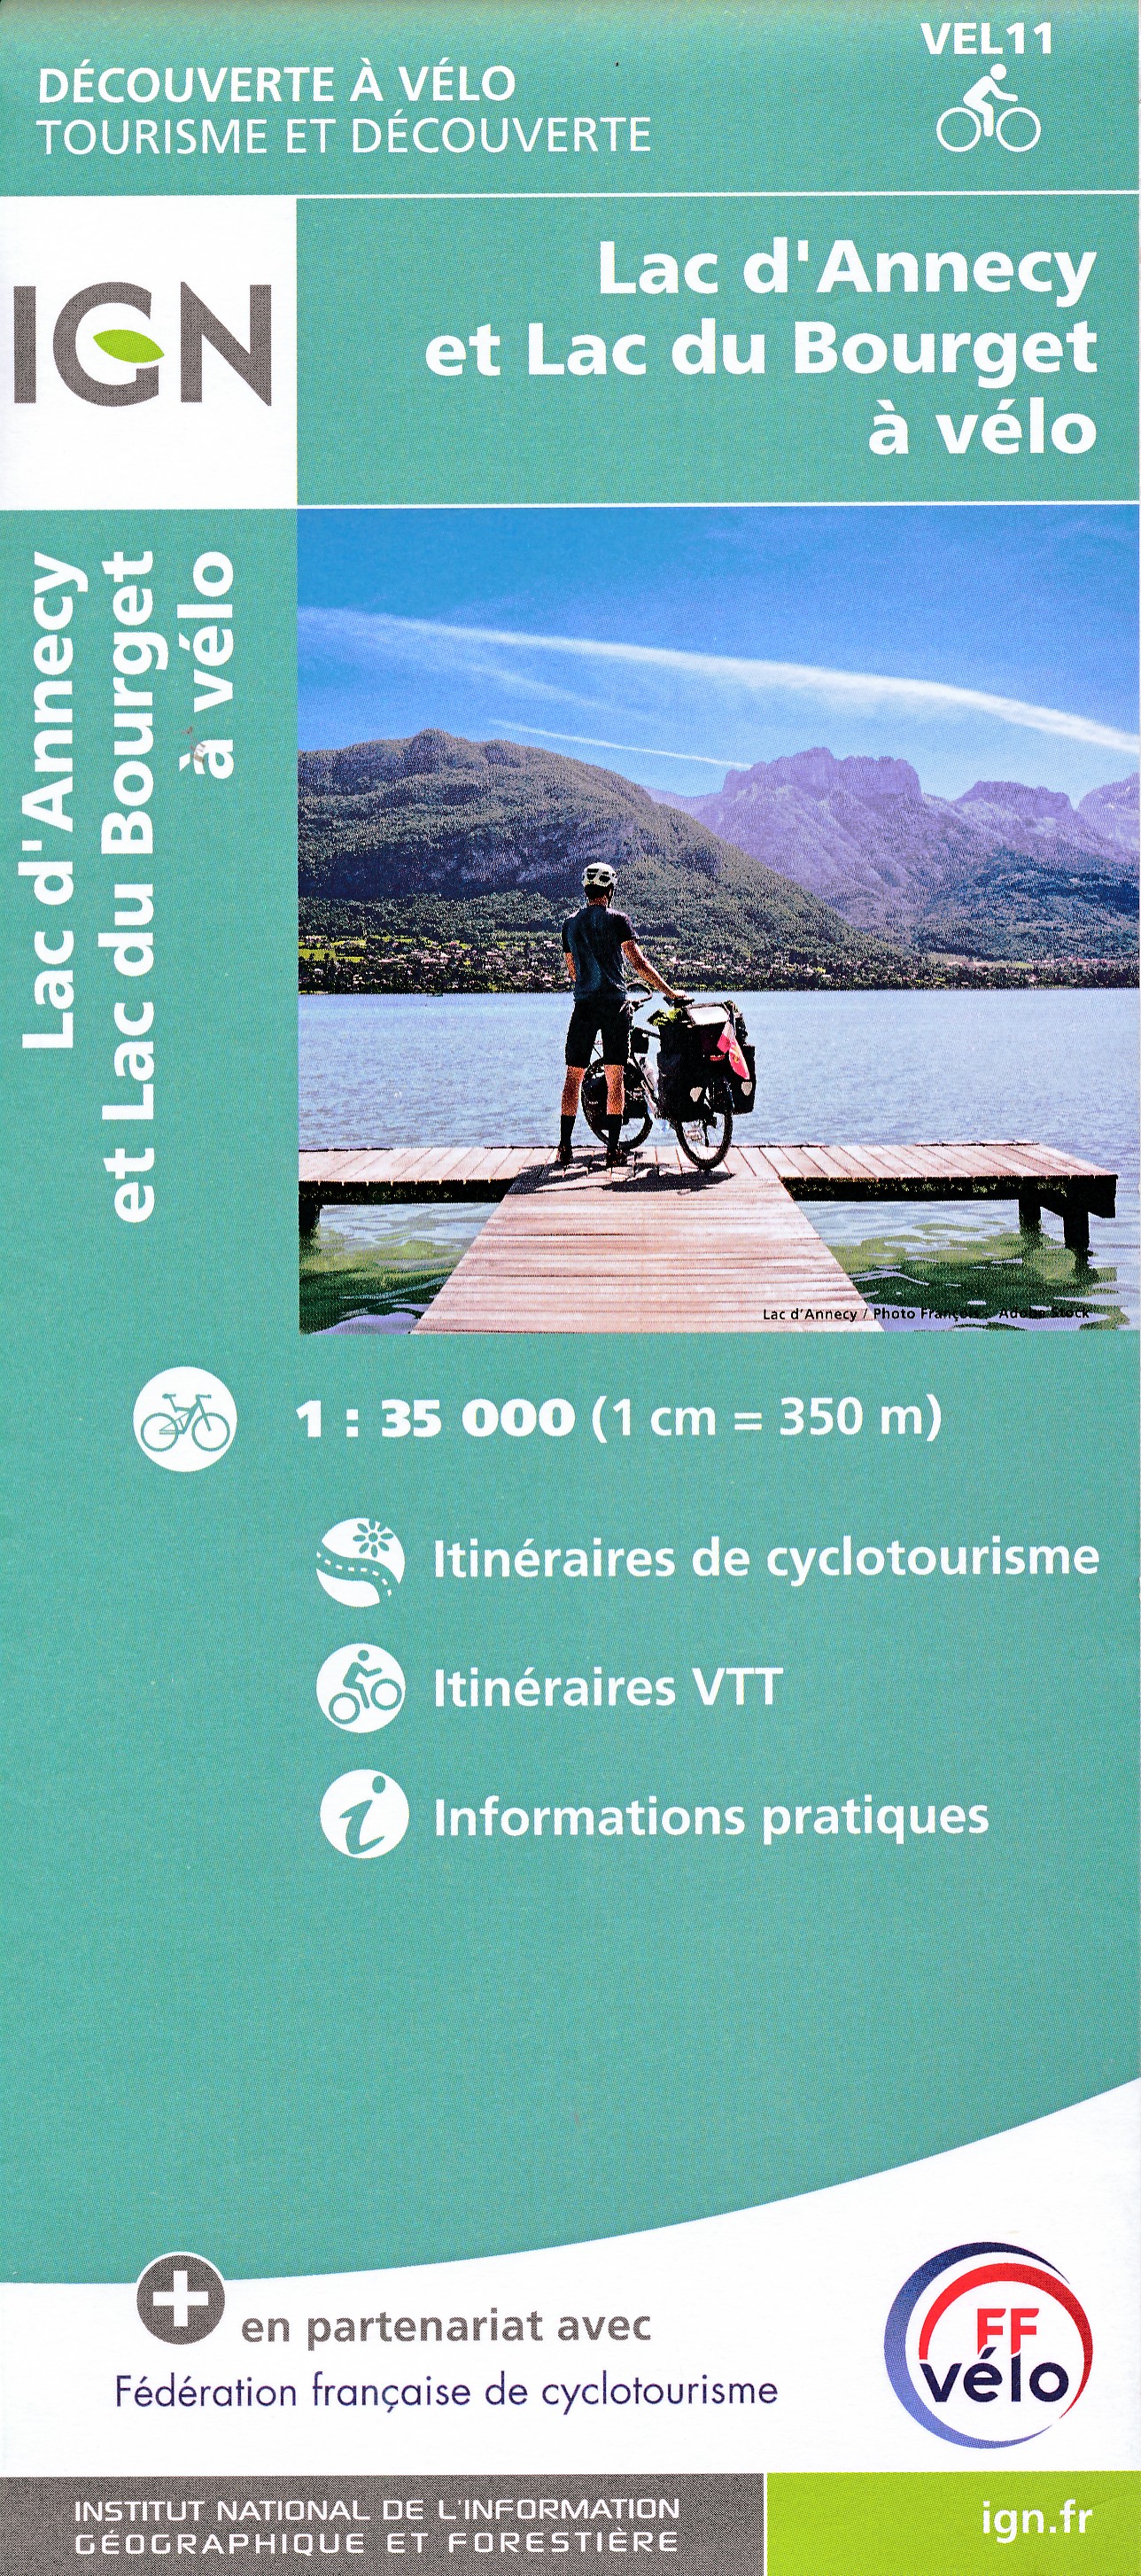 Online bestellen: Fietskaart 11 Velo Lac d'Annecy - Lac du Bourget a velo - by bike | IGN - Institut Géographique National